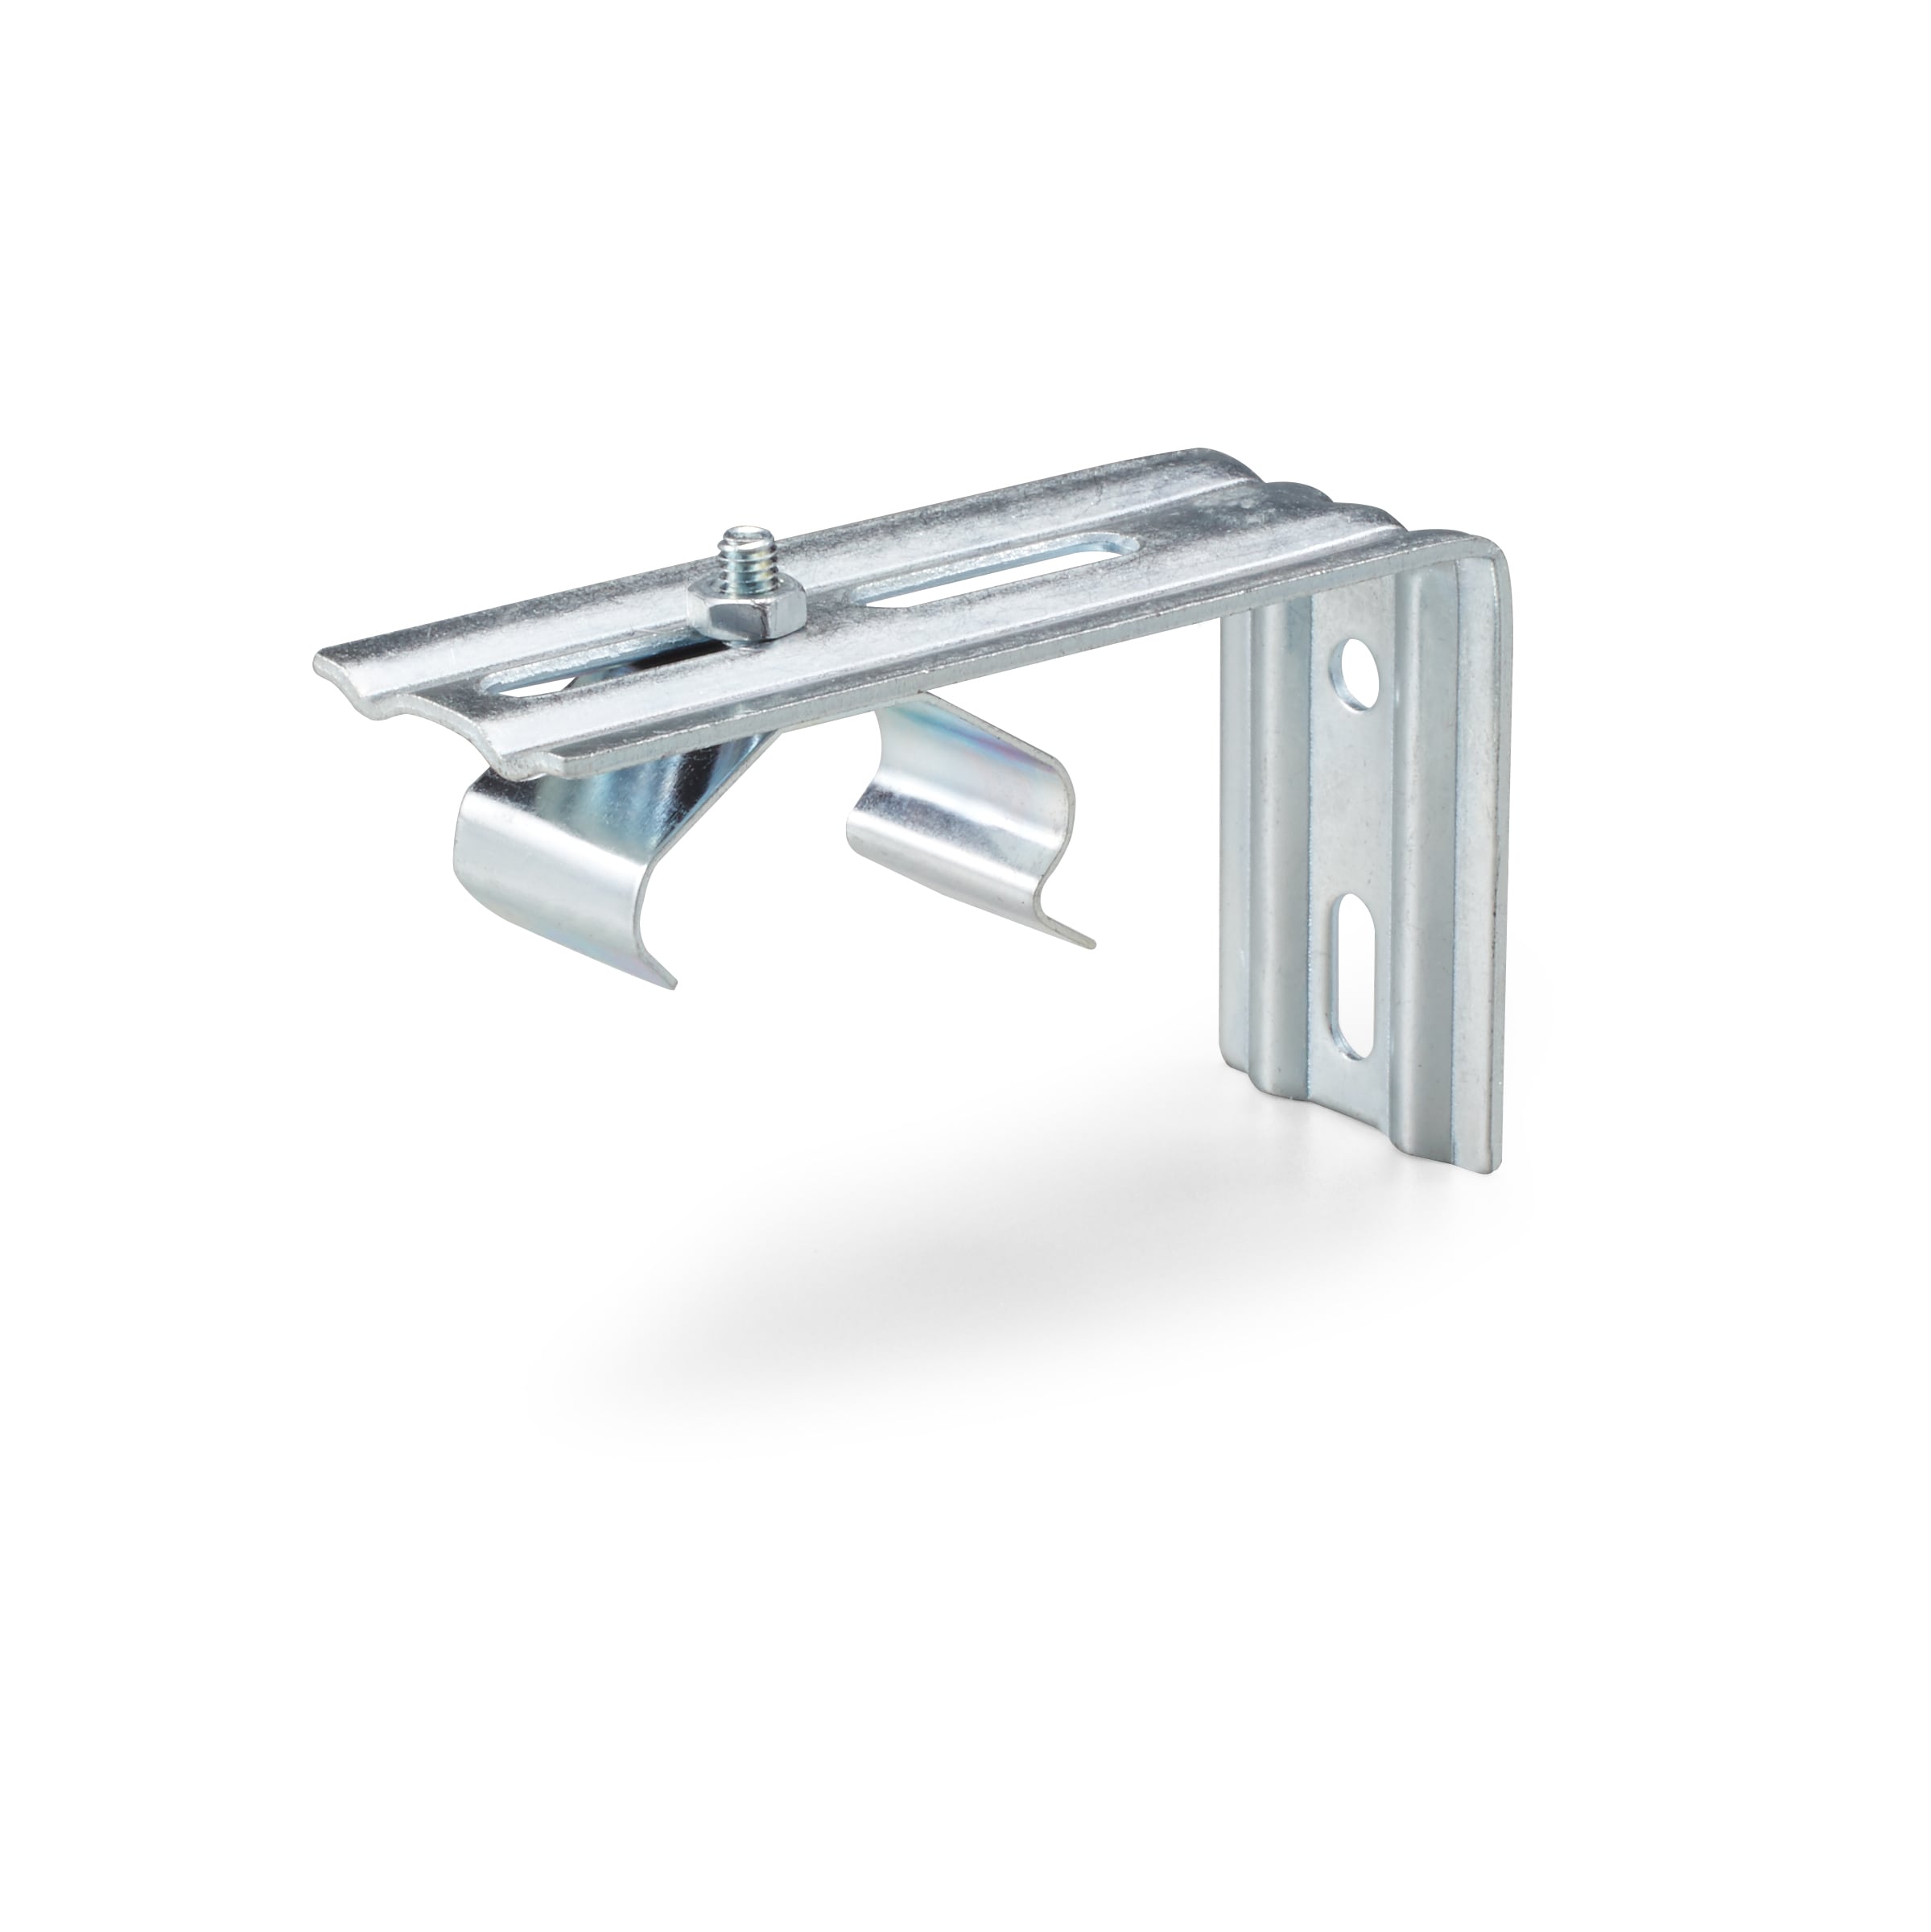 Vertical Blind Ceiling Mount Bracket Clip 3 Pack for 2 Inch Wide Headrails 